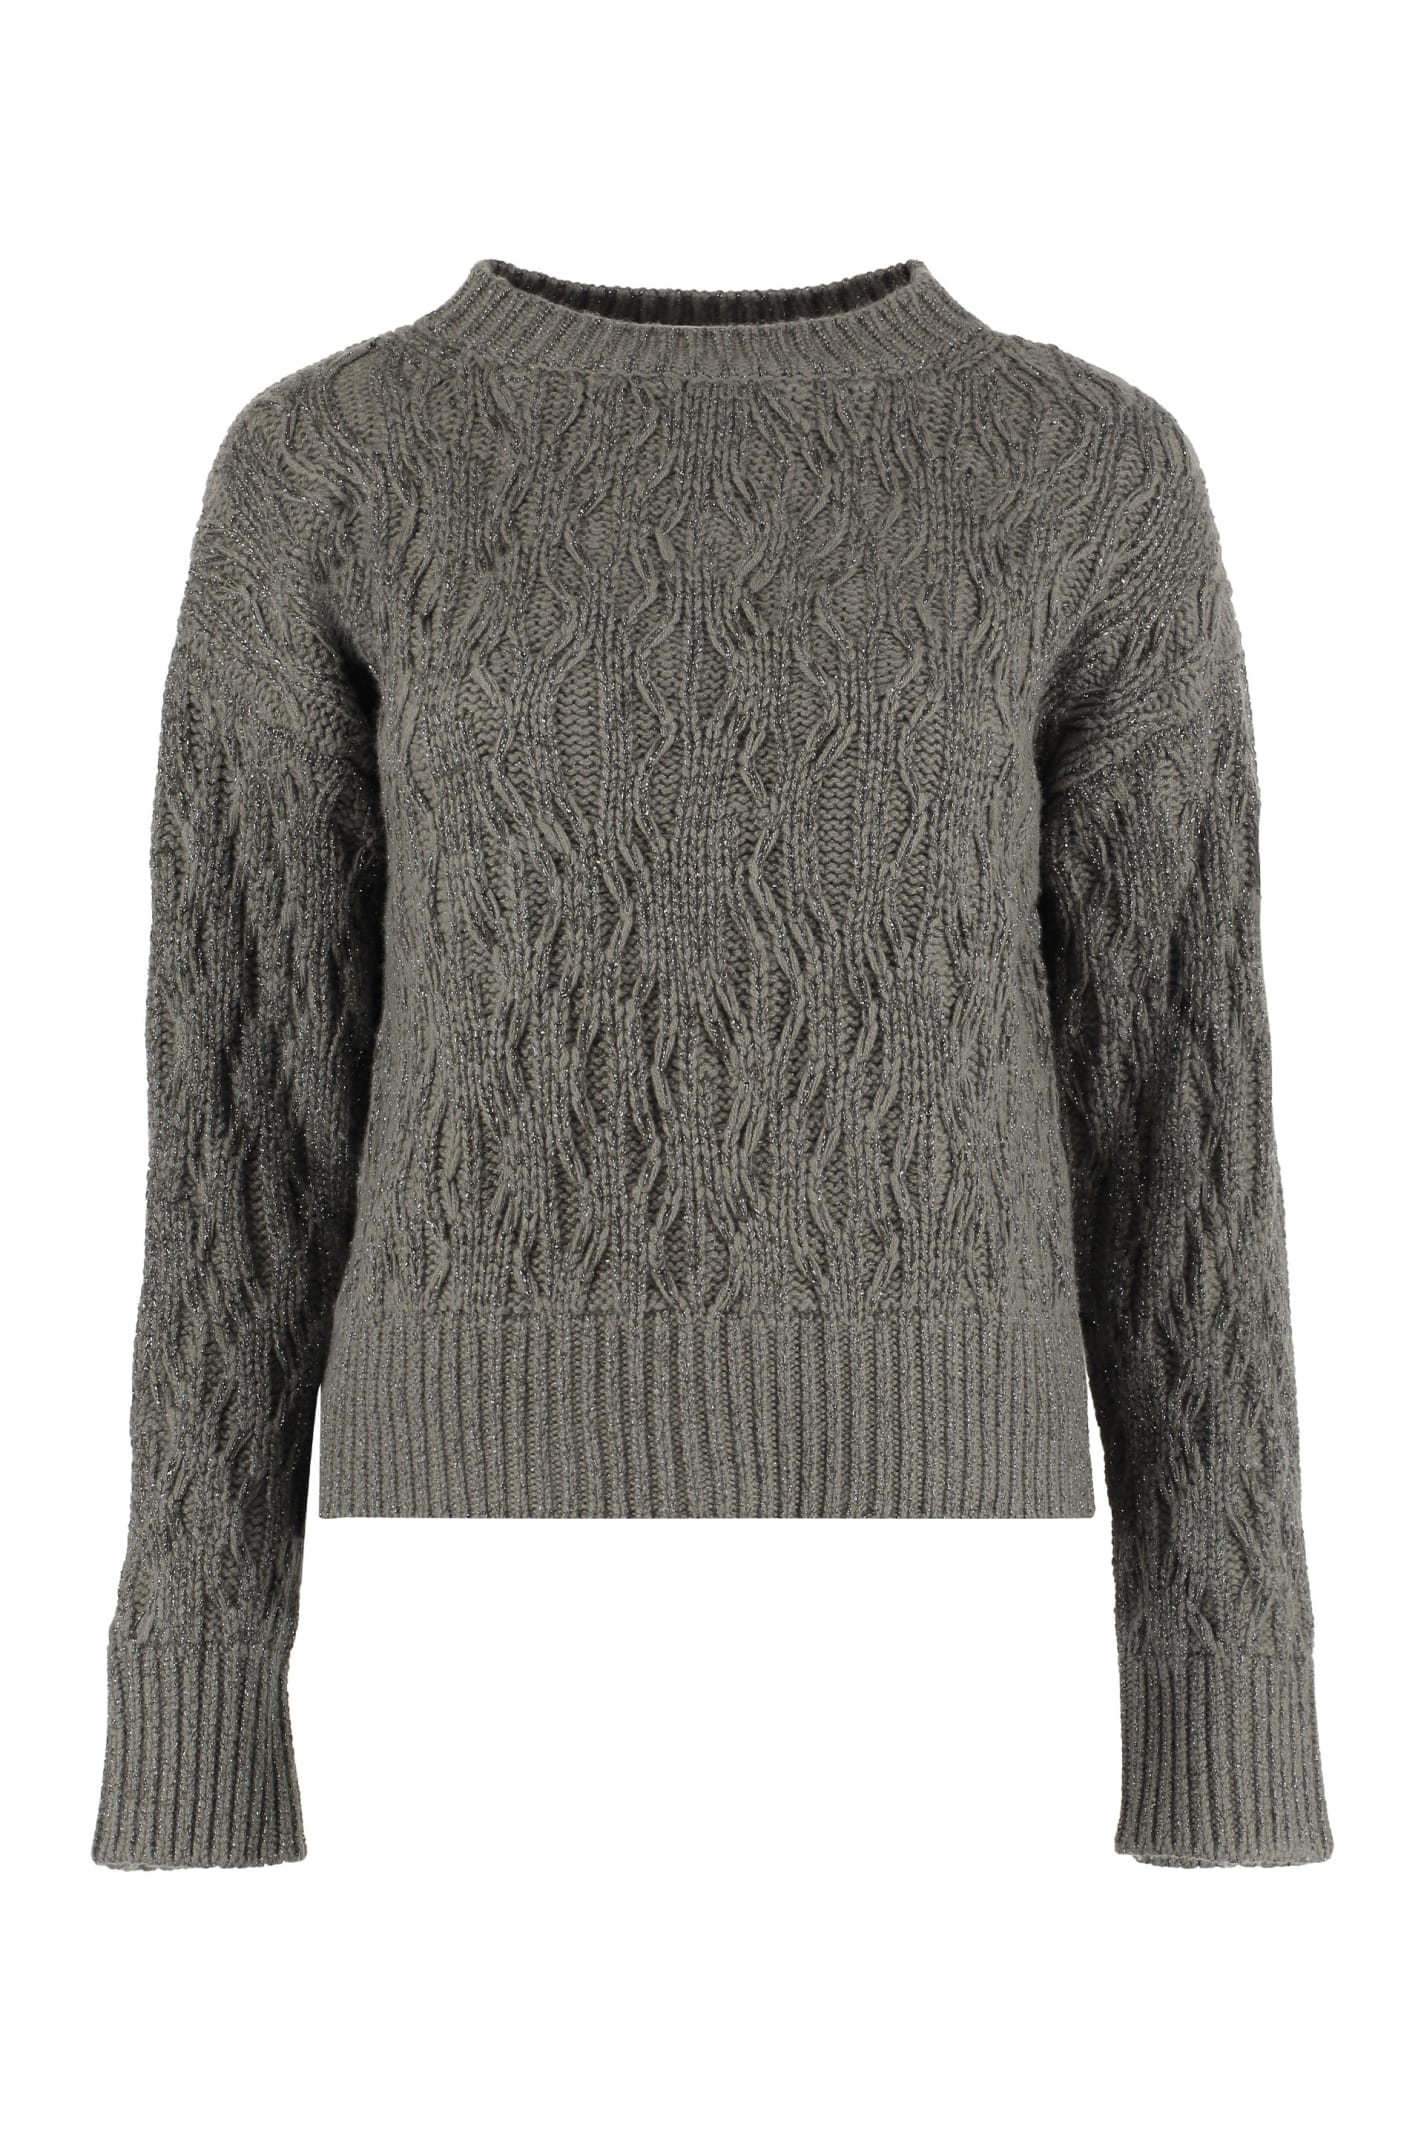 Fabiana Filippi Cable Knit Sweater